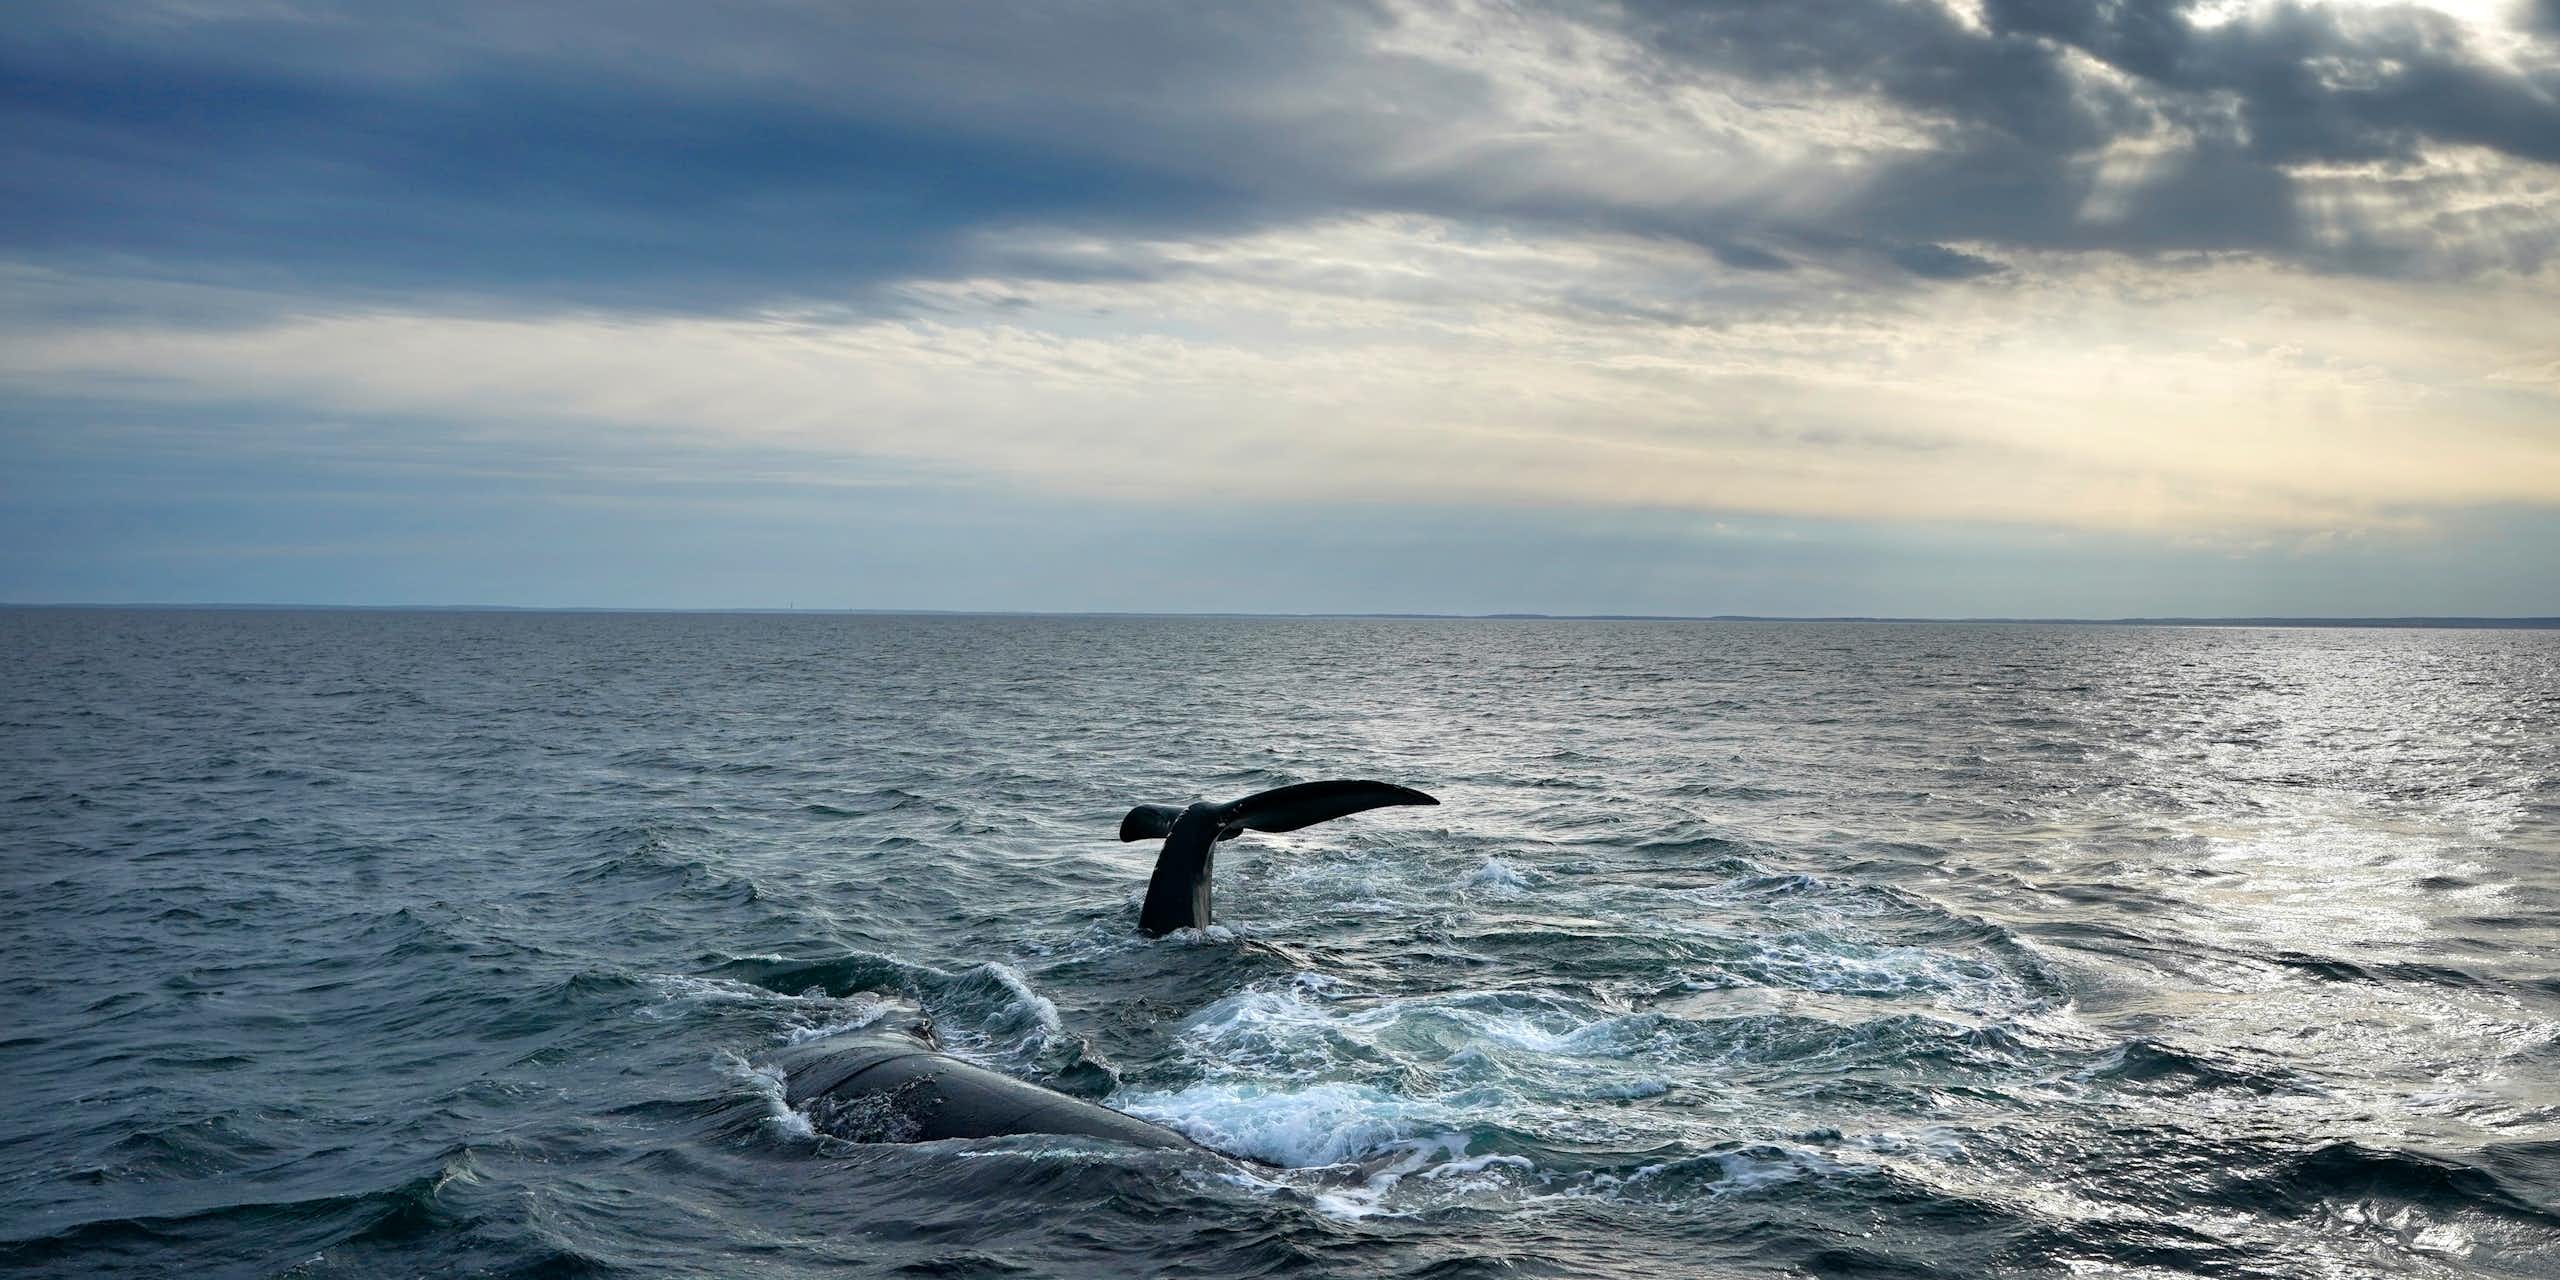 Whales seen in the ocean.